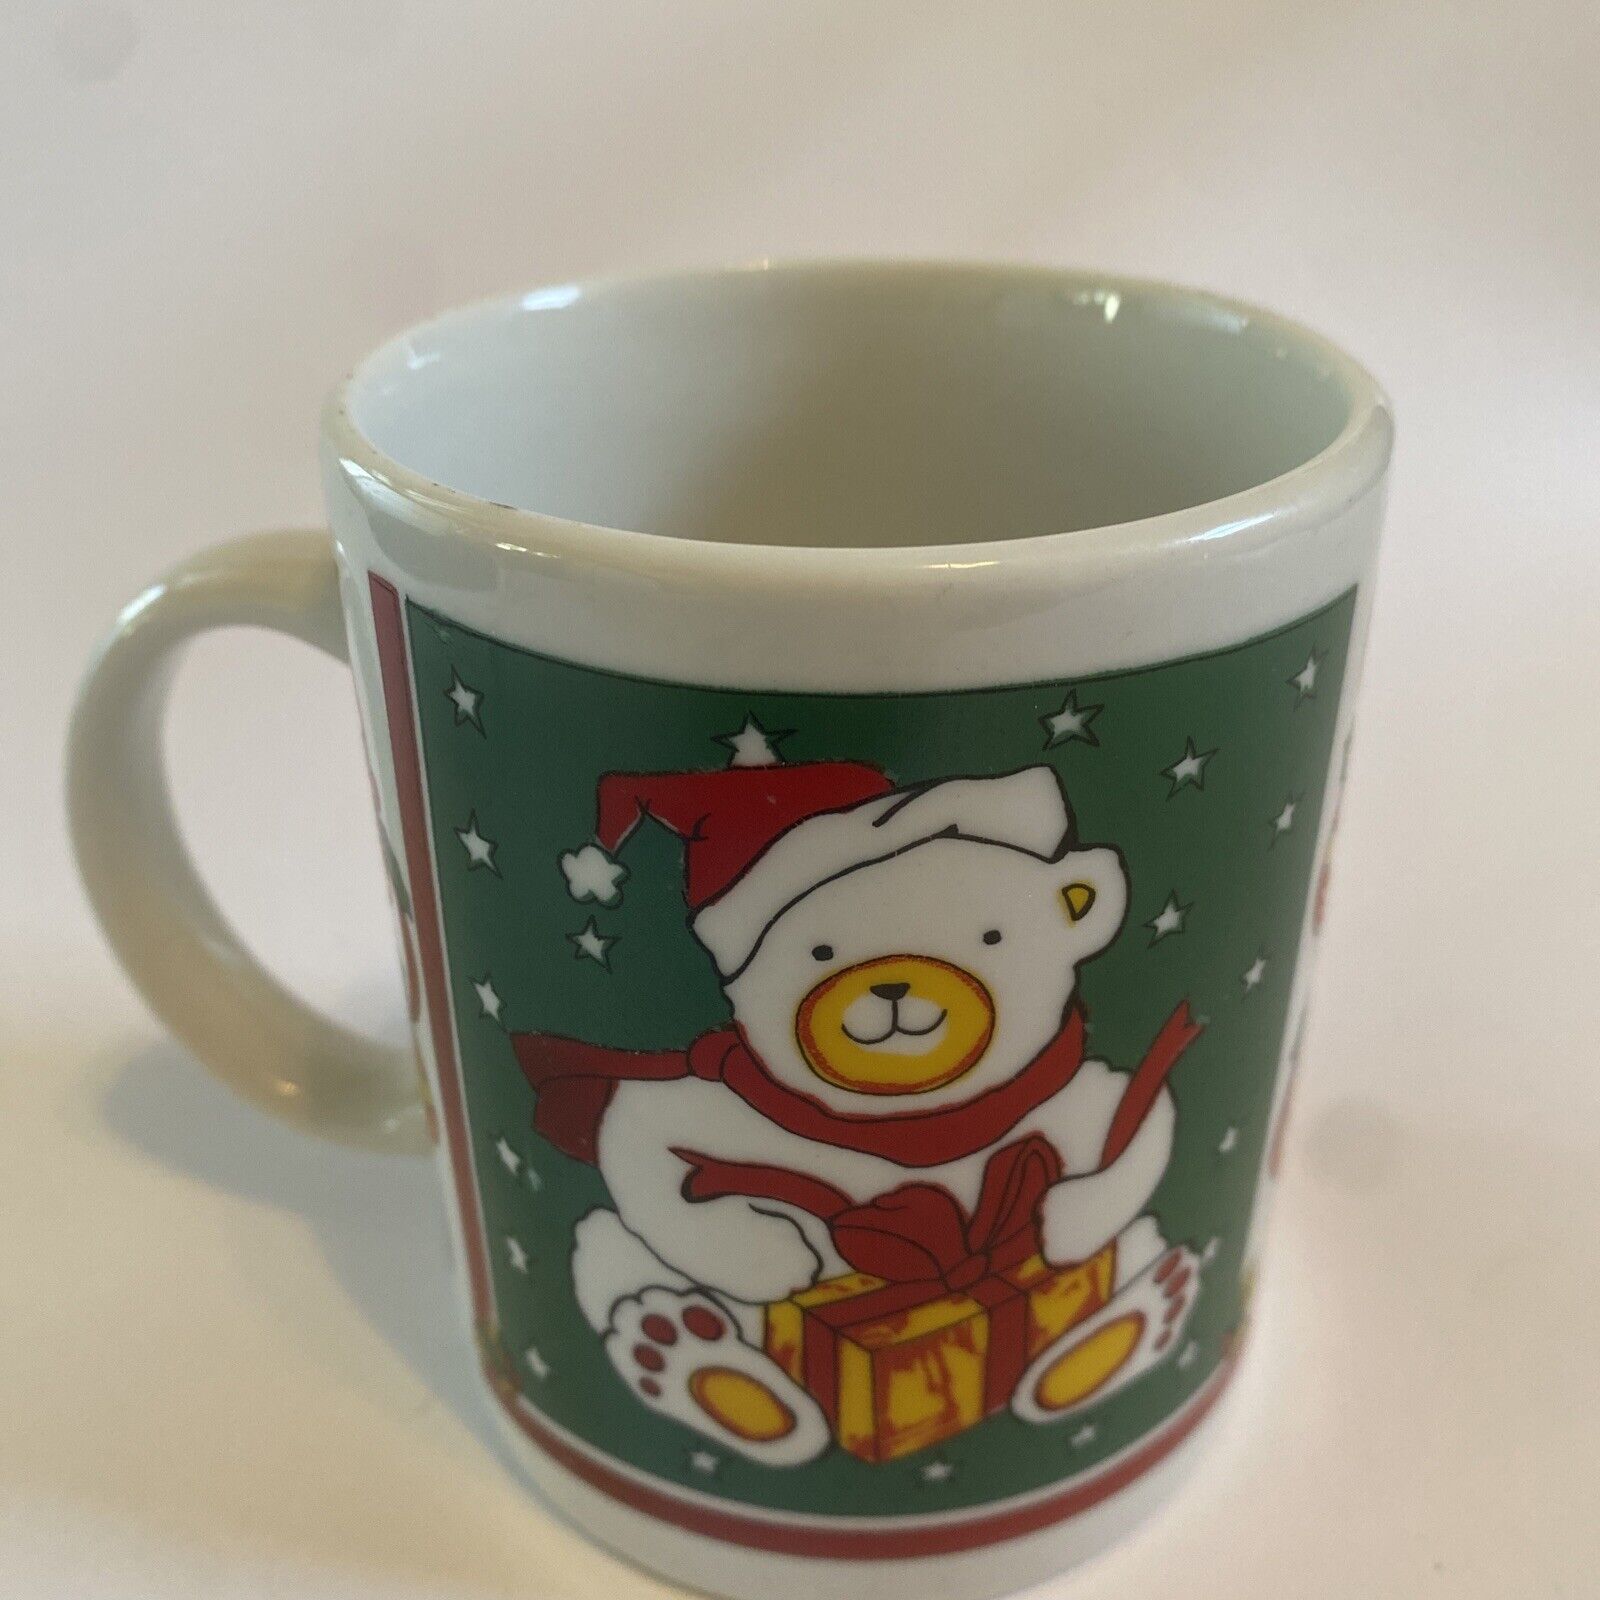 Houston Foods 1986 Coffee Holiday Christmas Mug Vintage Teddy Bear Presents